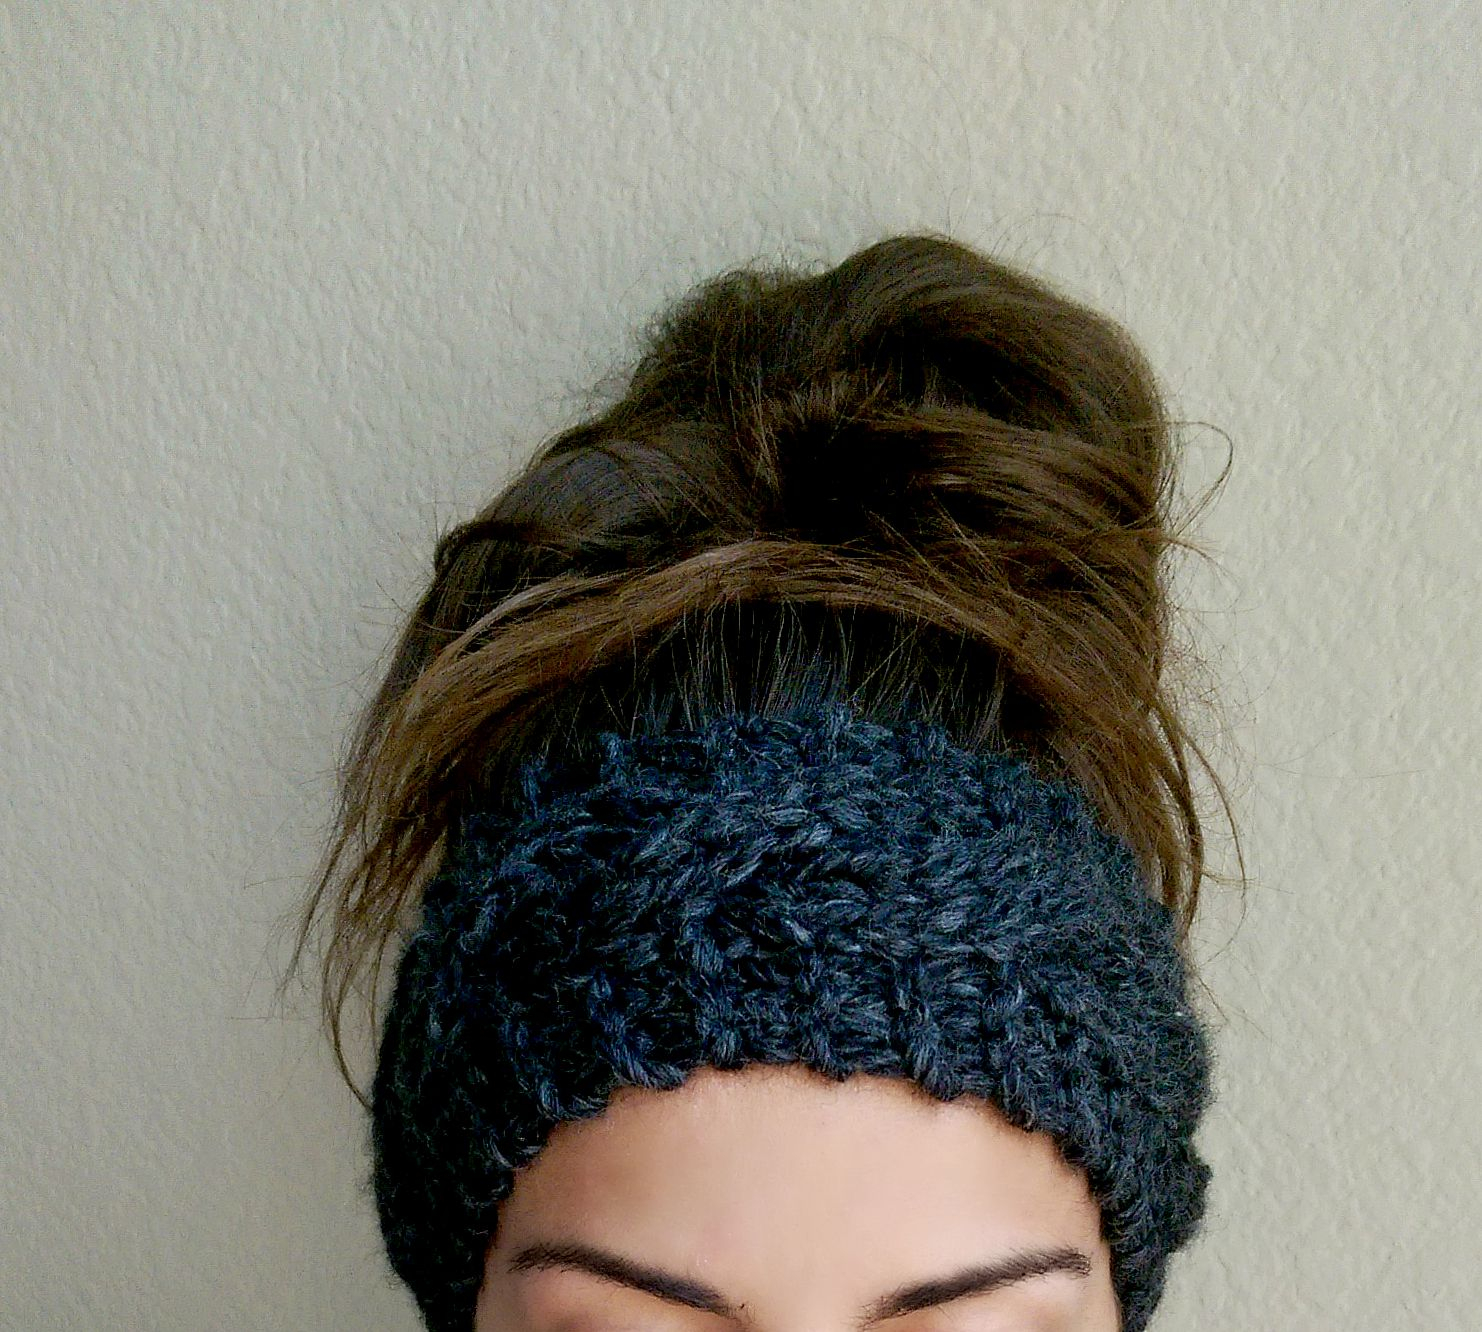 Knitted Headband With Flower Pattern 10 Knit Headband Ear Warmer Patterns The Funky Stitch